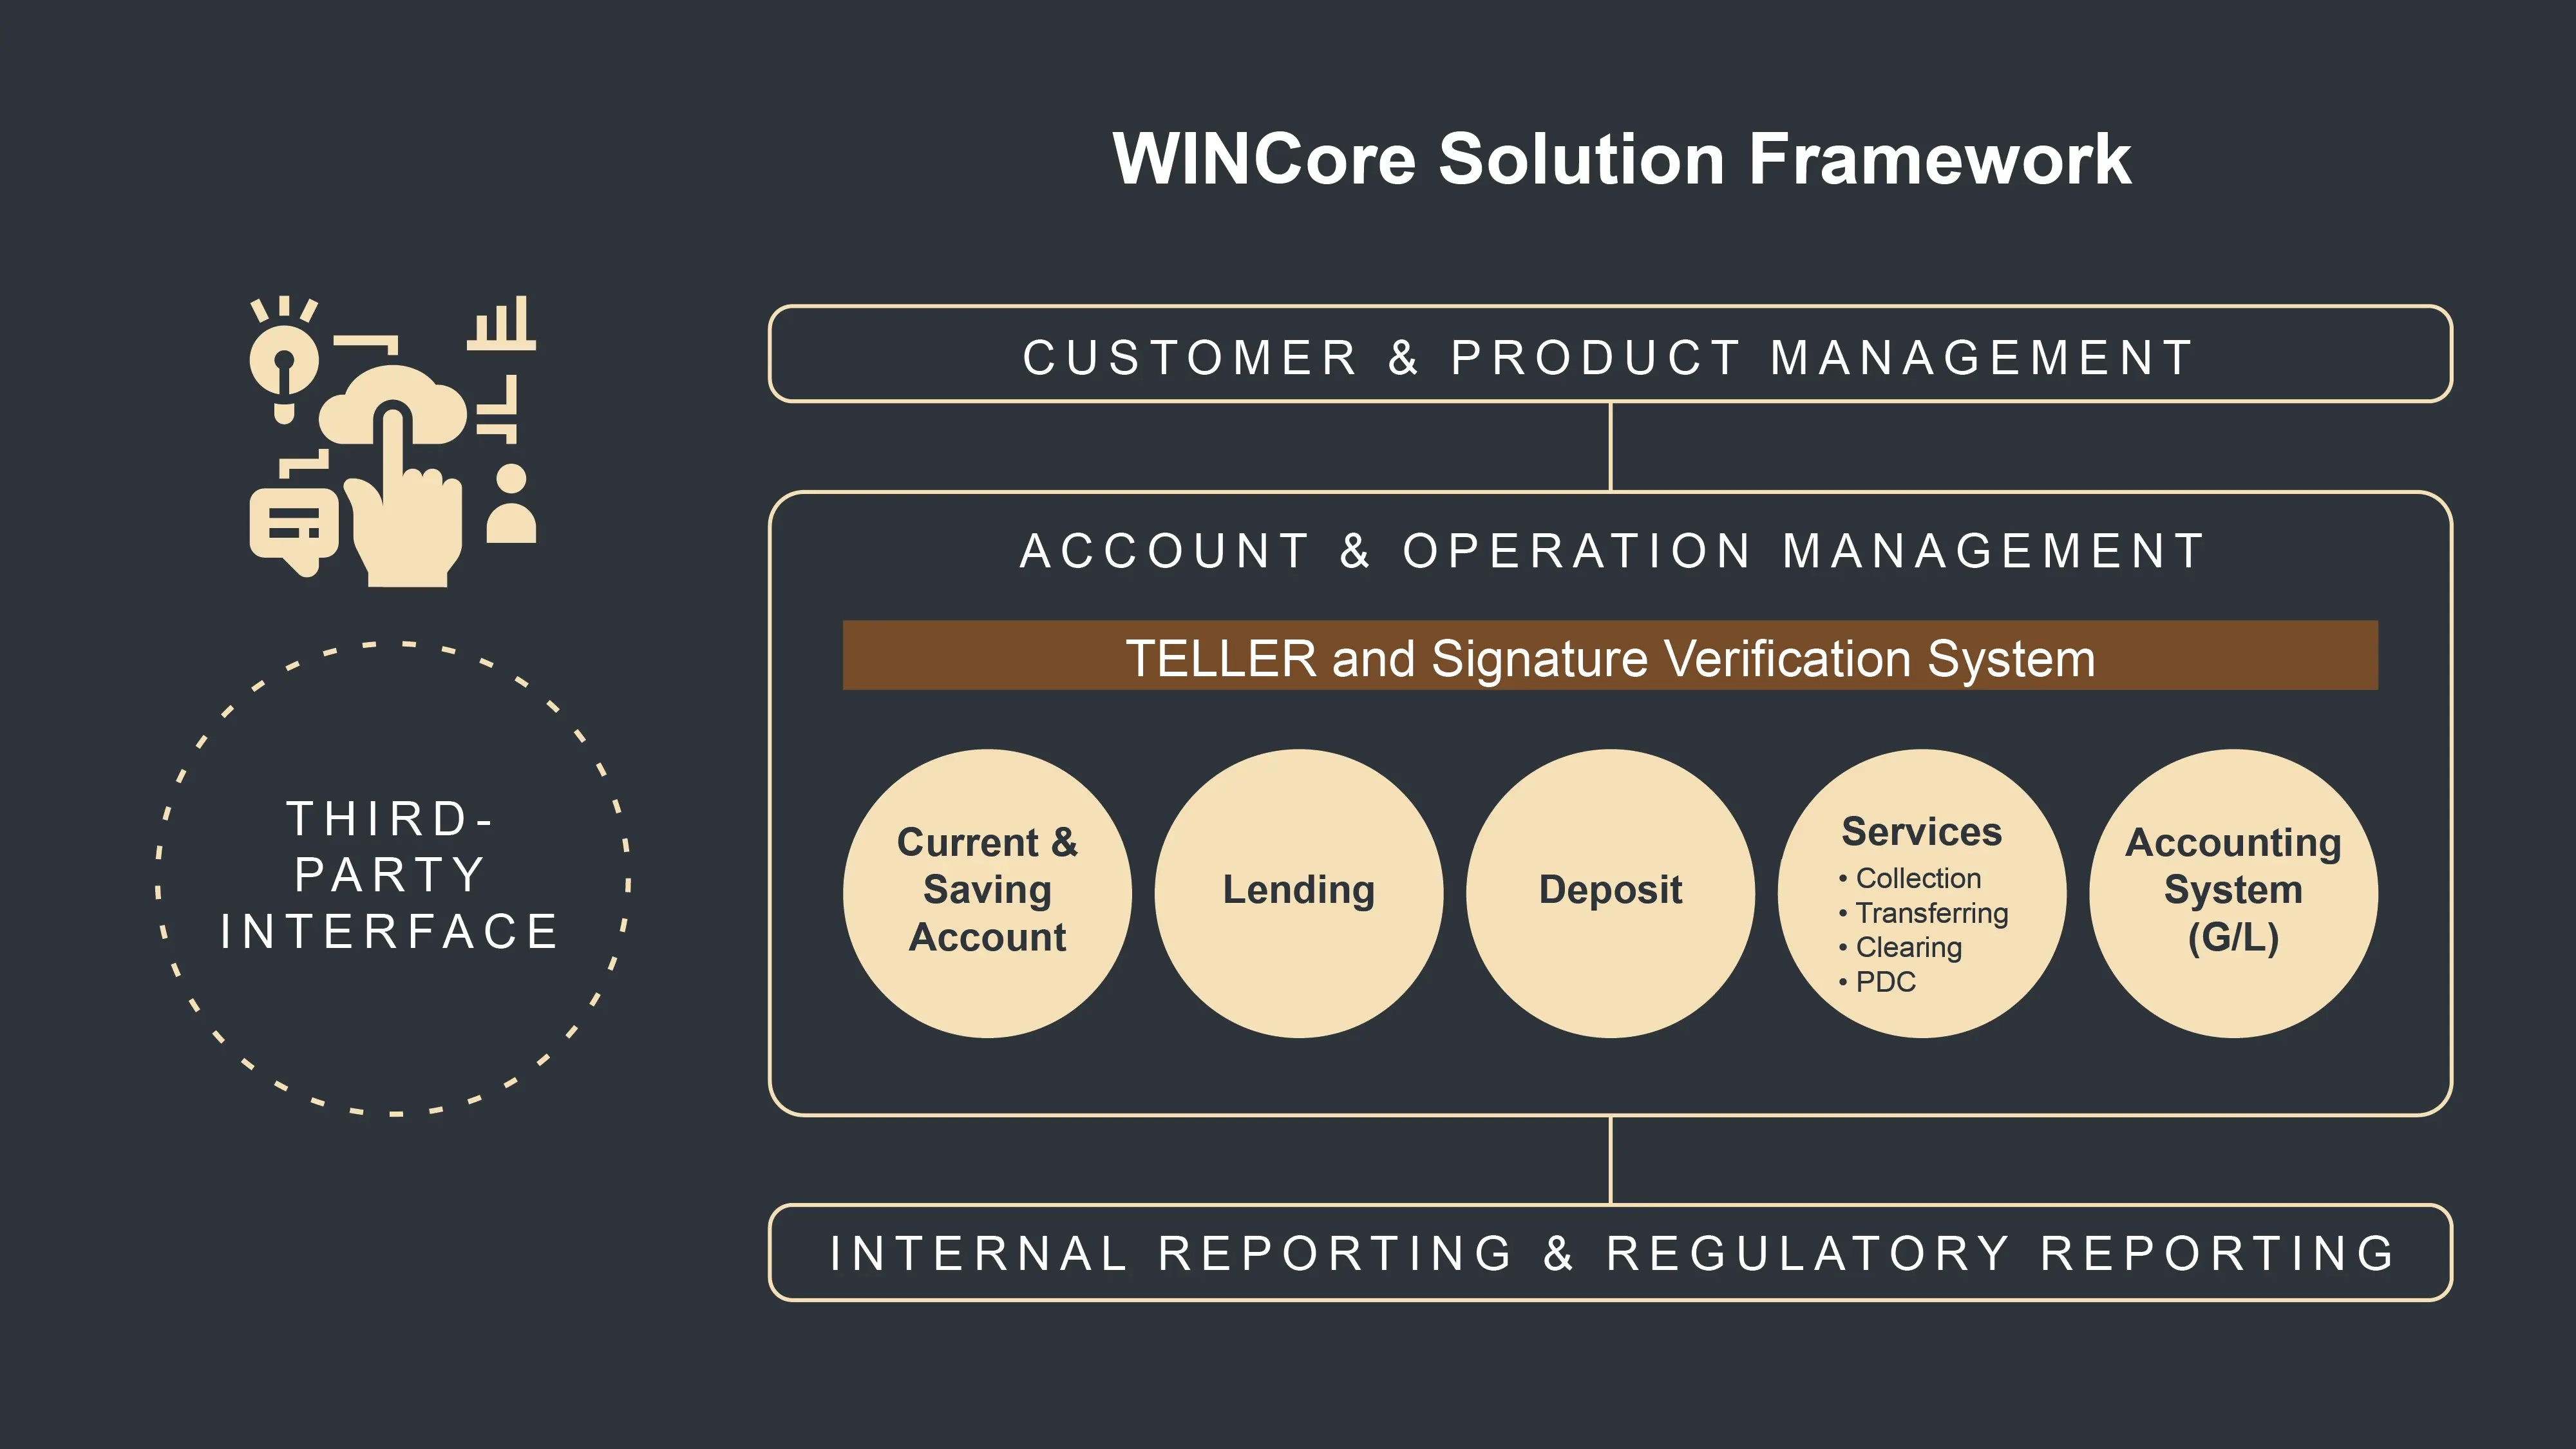 WINCore's solution framework